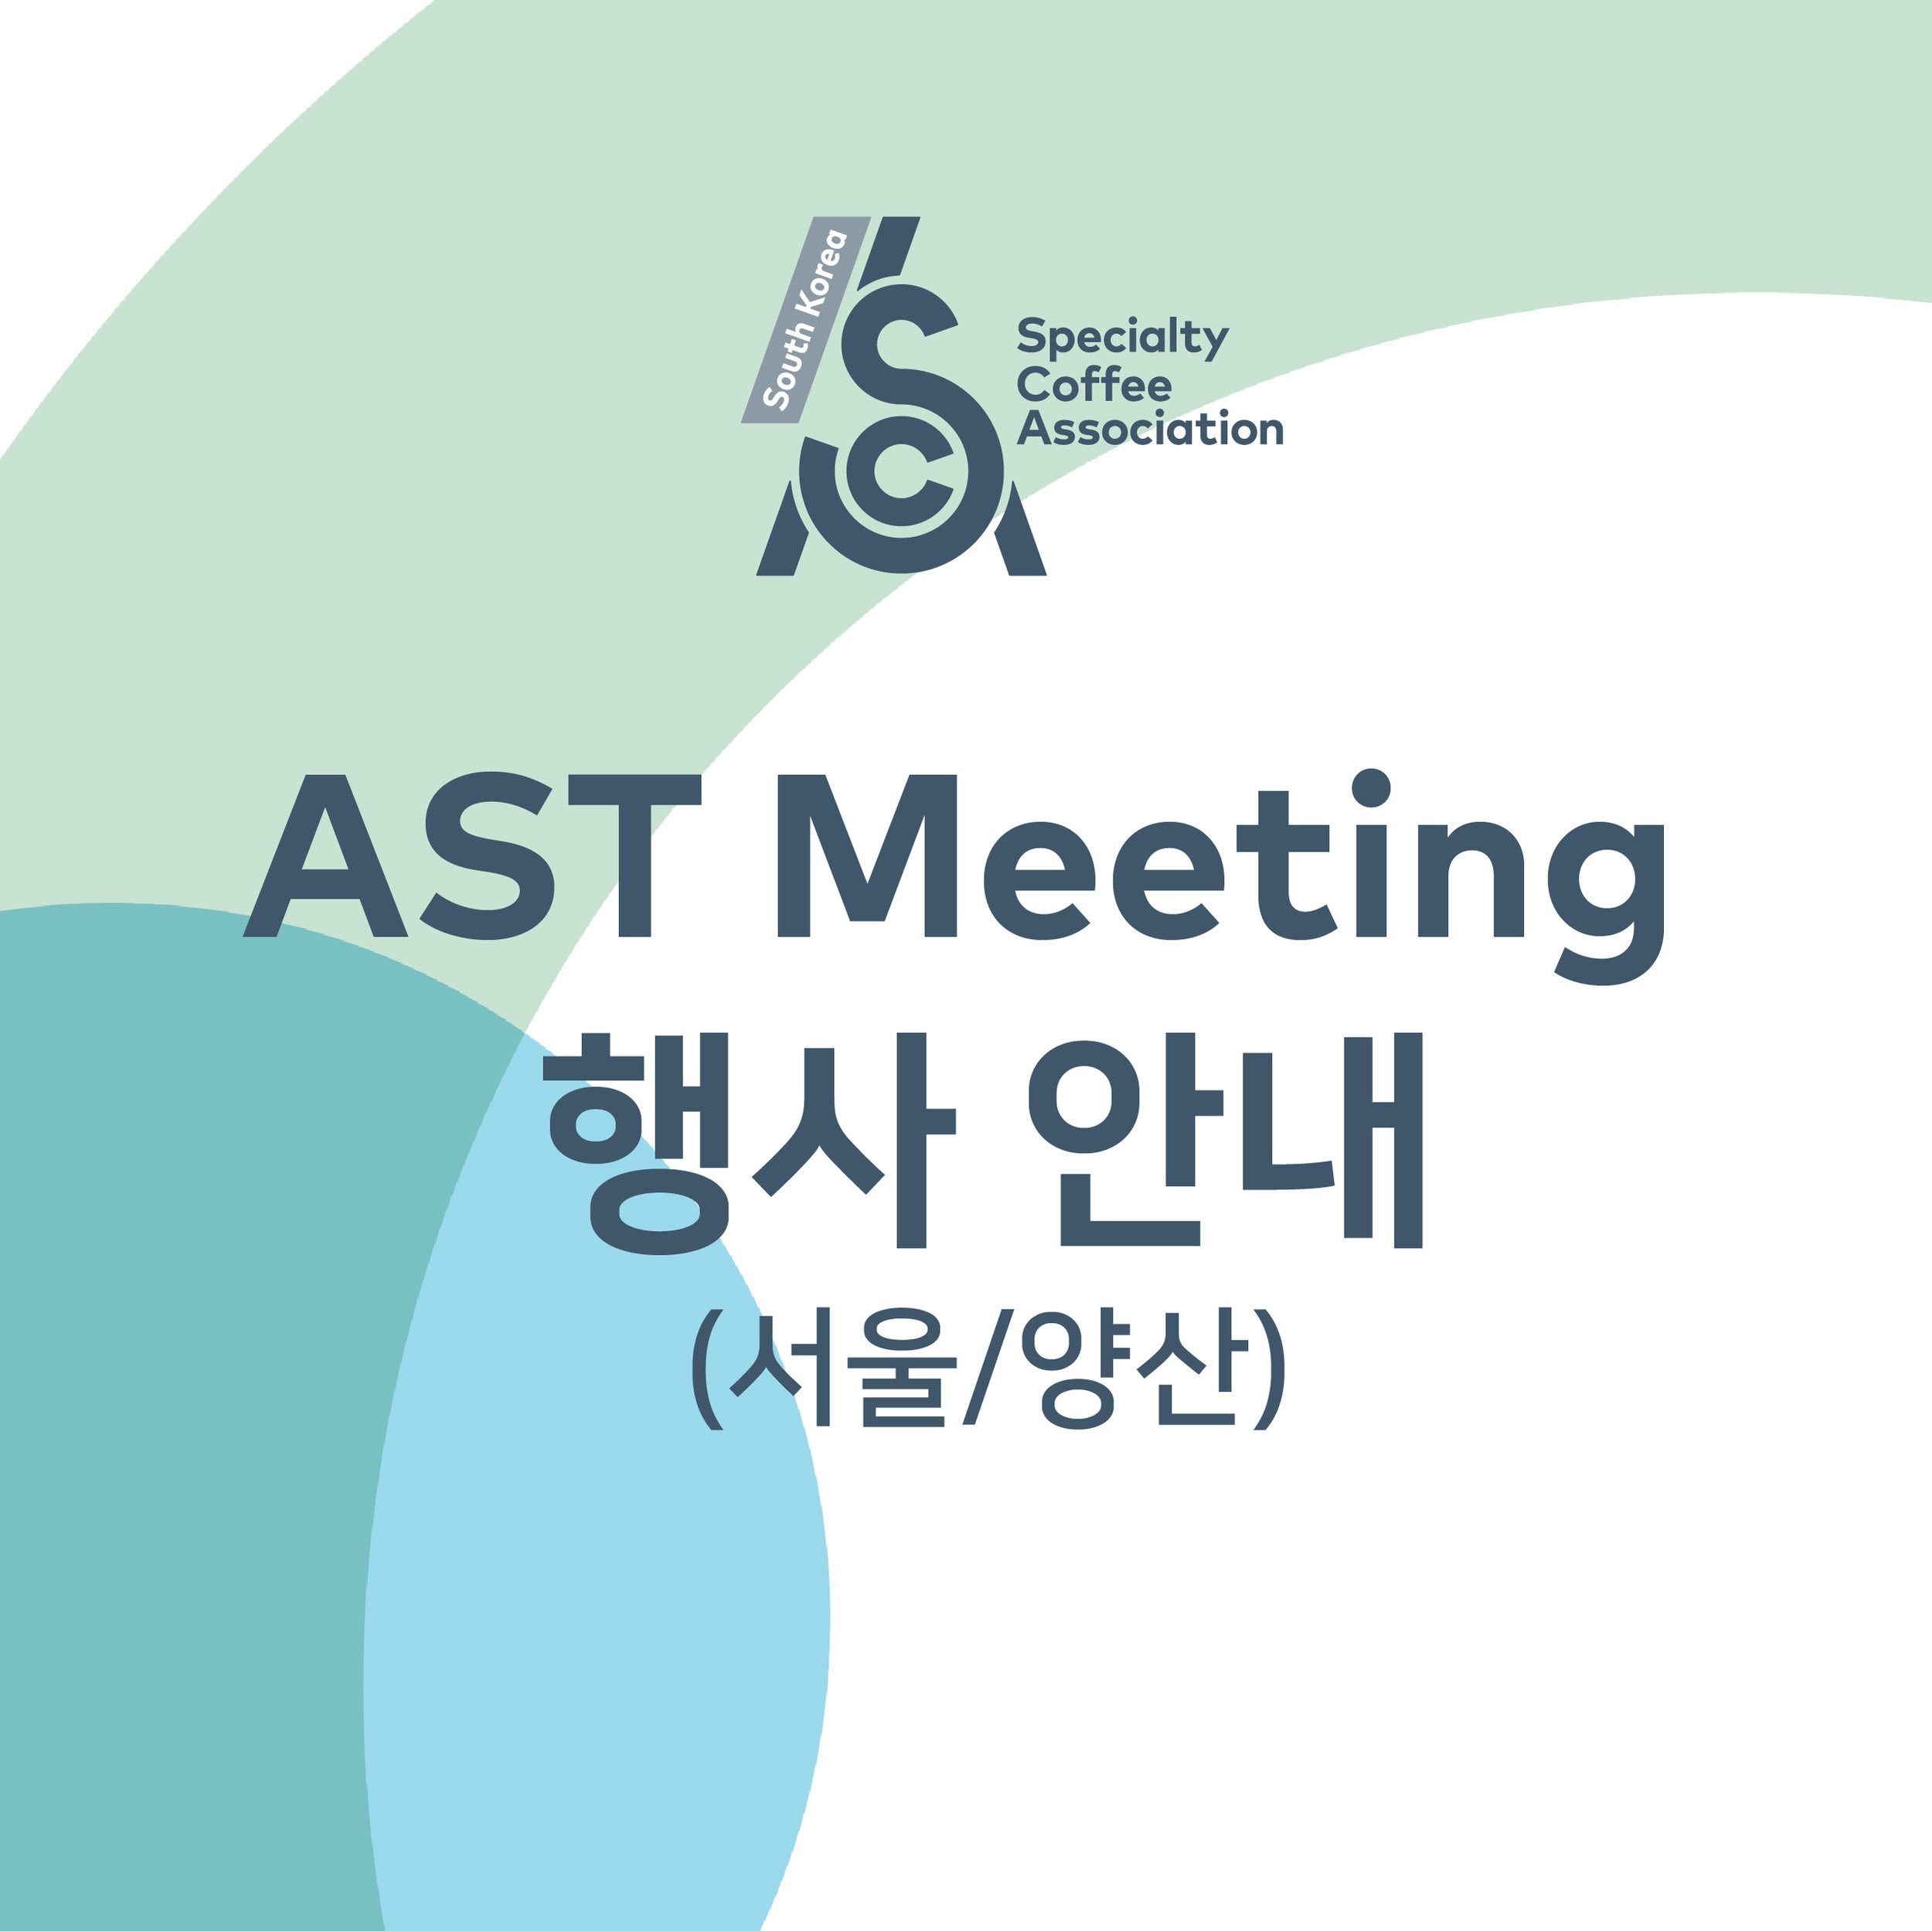 AST Meeting 행사안내 SNS.jpg